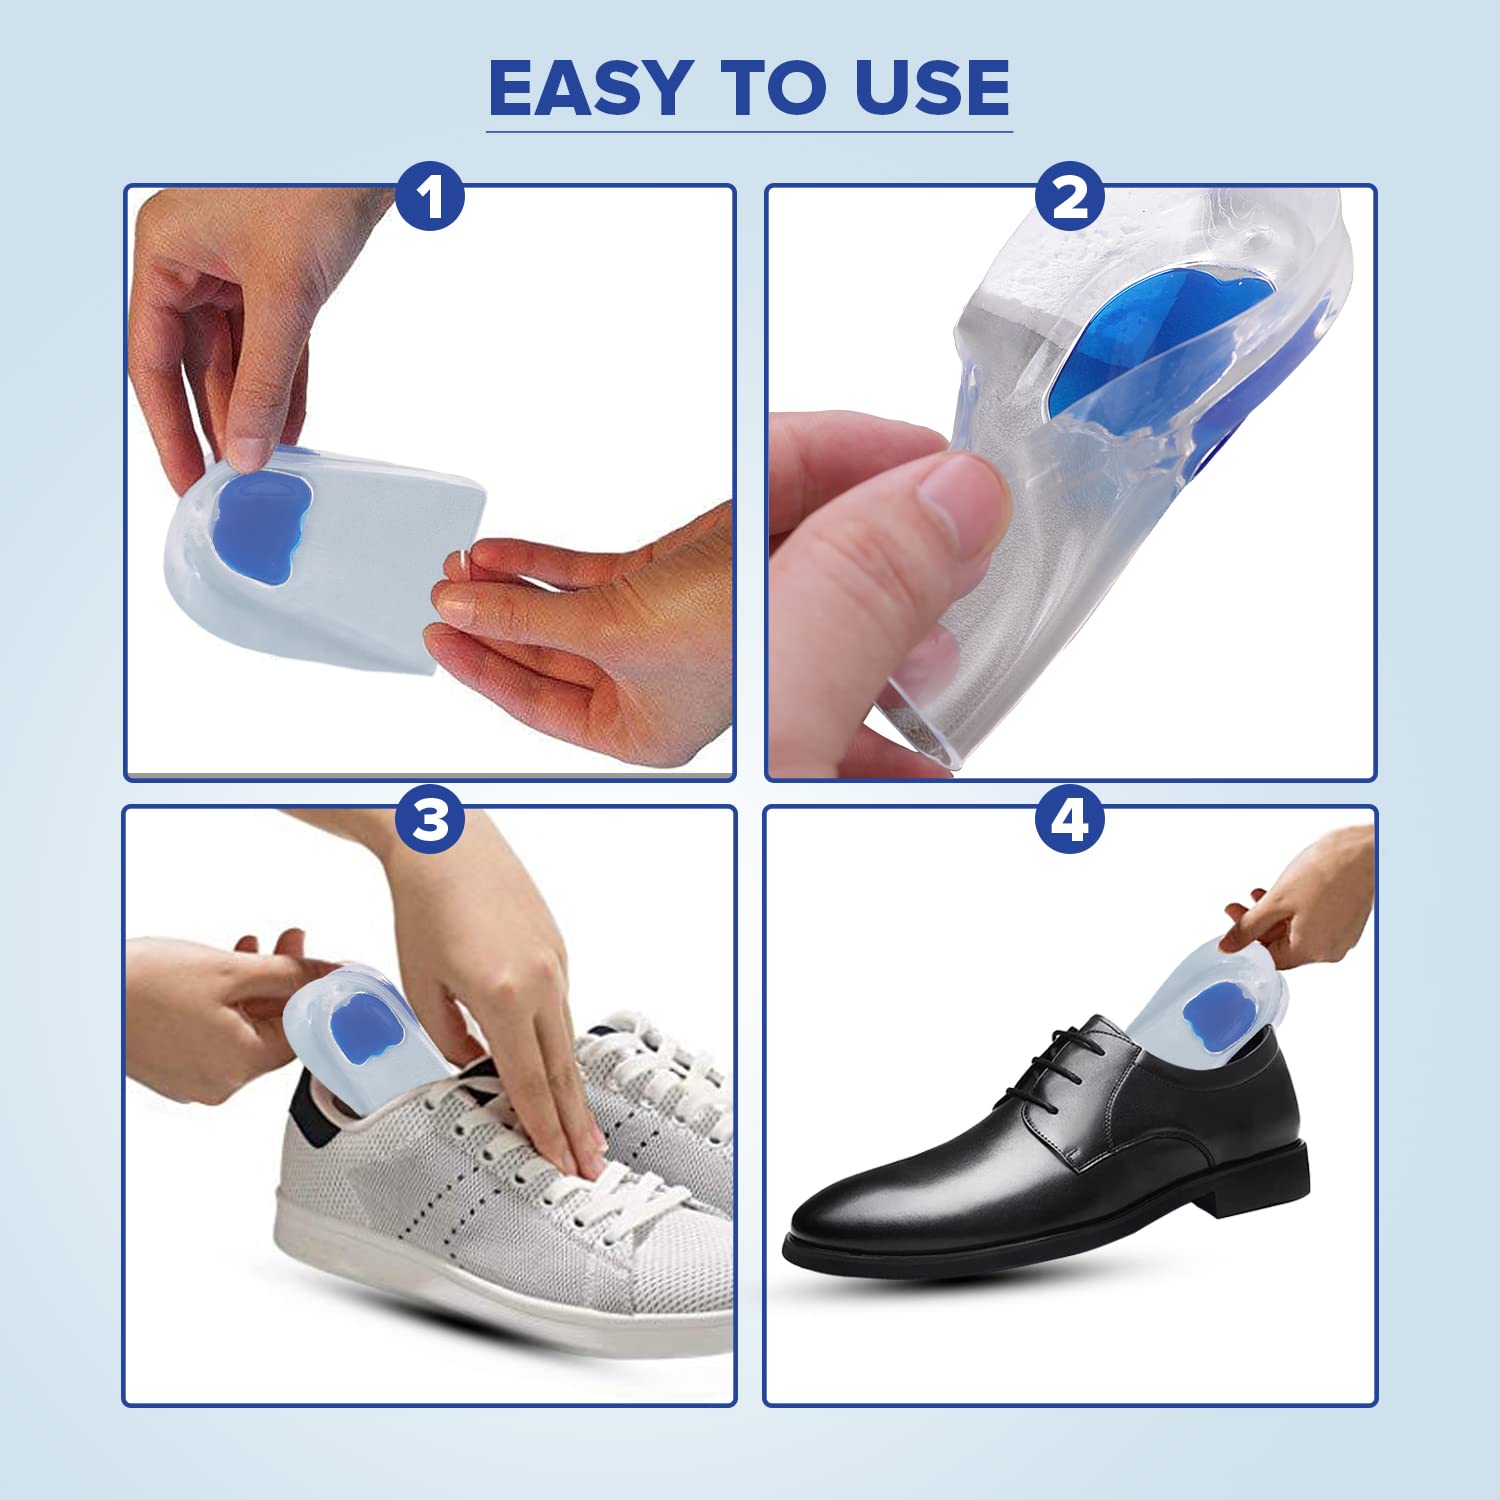 Dr Foot Gel Heel Cups Pair | Foot Comfort Support Protectors | For Bone Spurs Pain Relief Protectors Of Your Sore | Massaging & Shock Absorbing Gel | For Men - 1 Pair (Pack of 10)